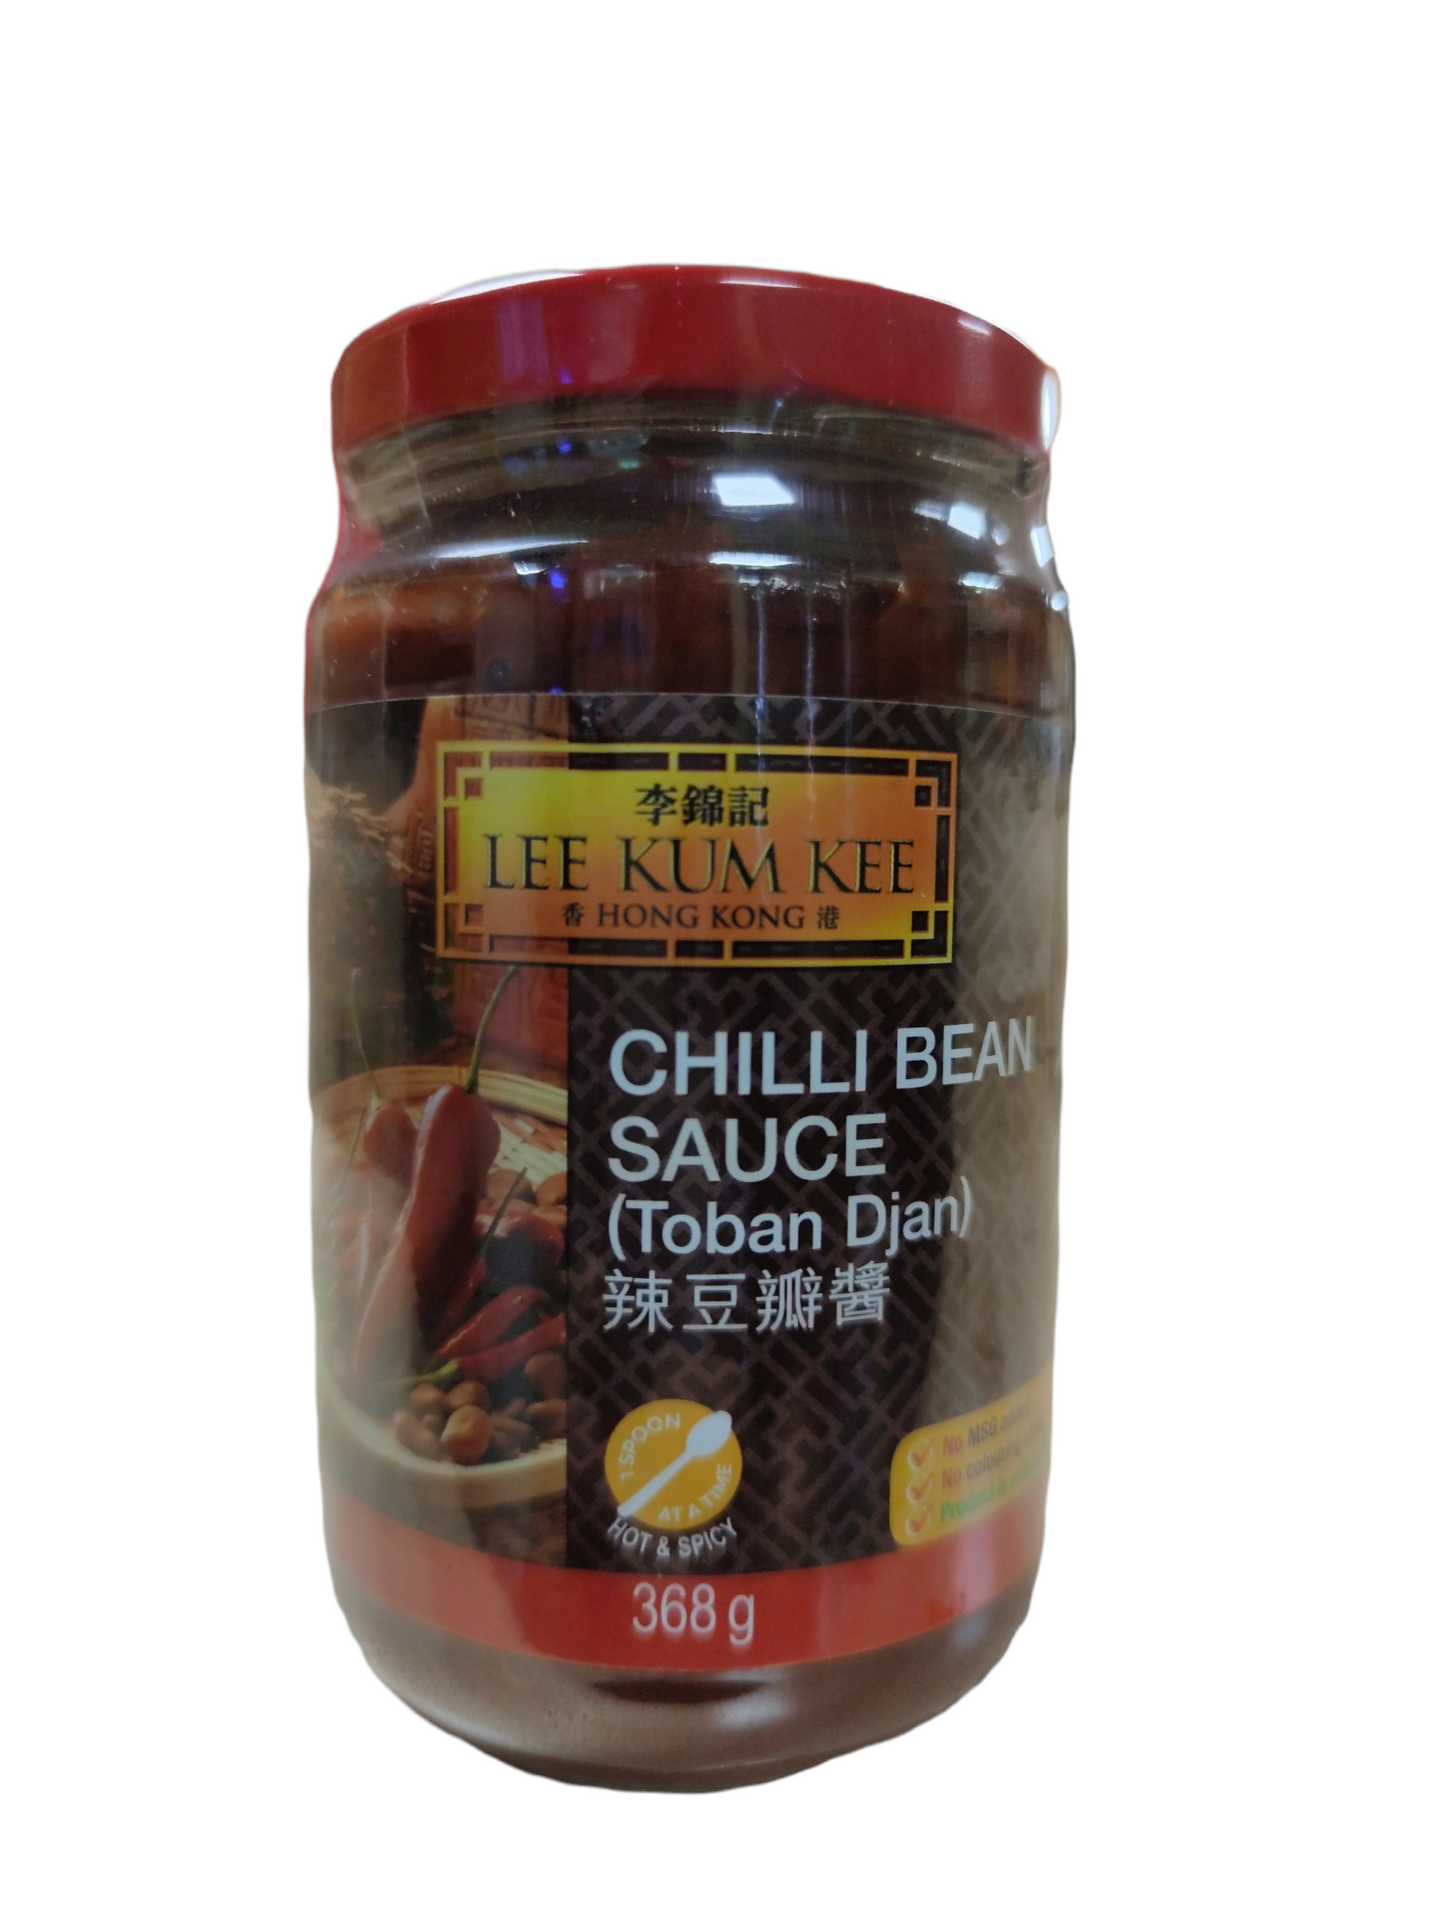 LKK Toban Djian (Chilli Bean Sauce) 368g 李錦記辣豆瓣醬